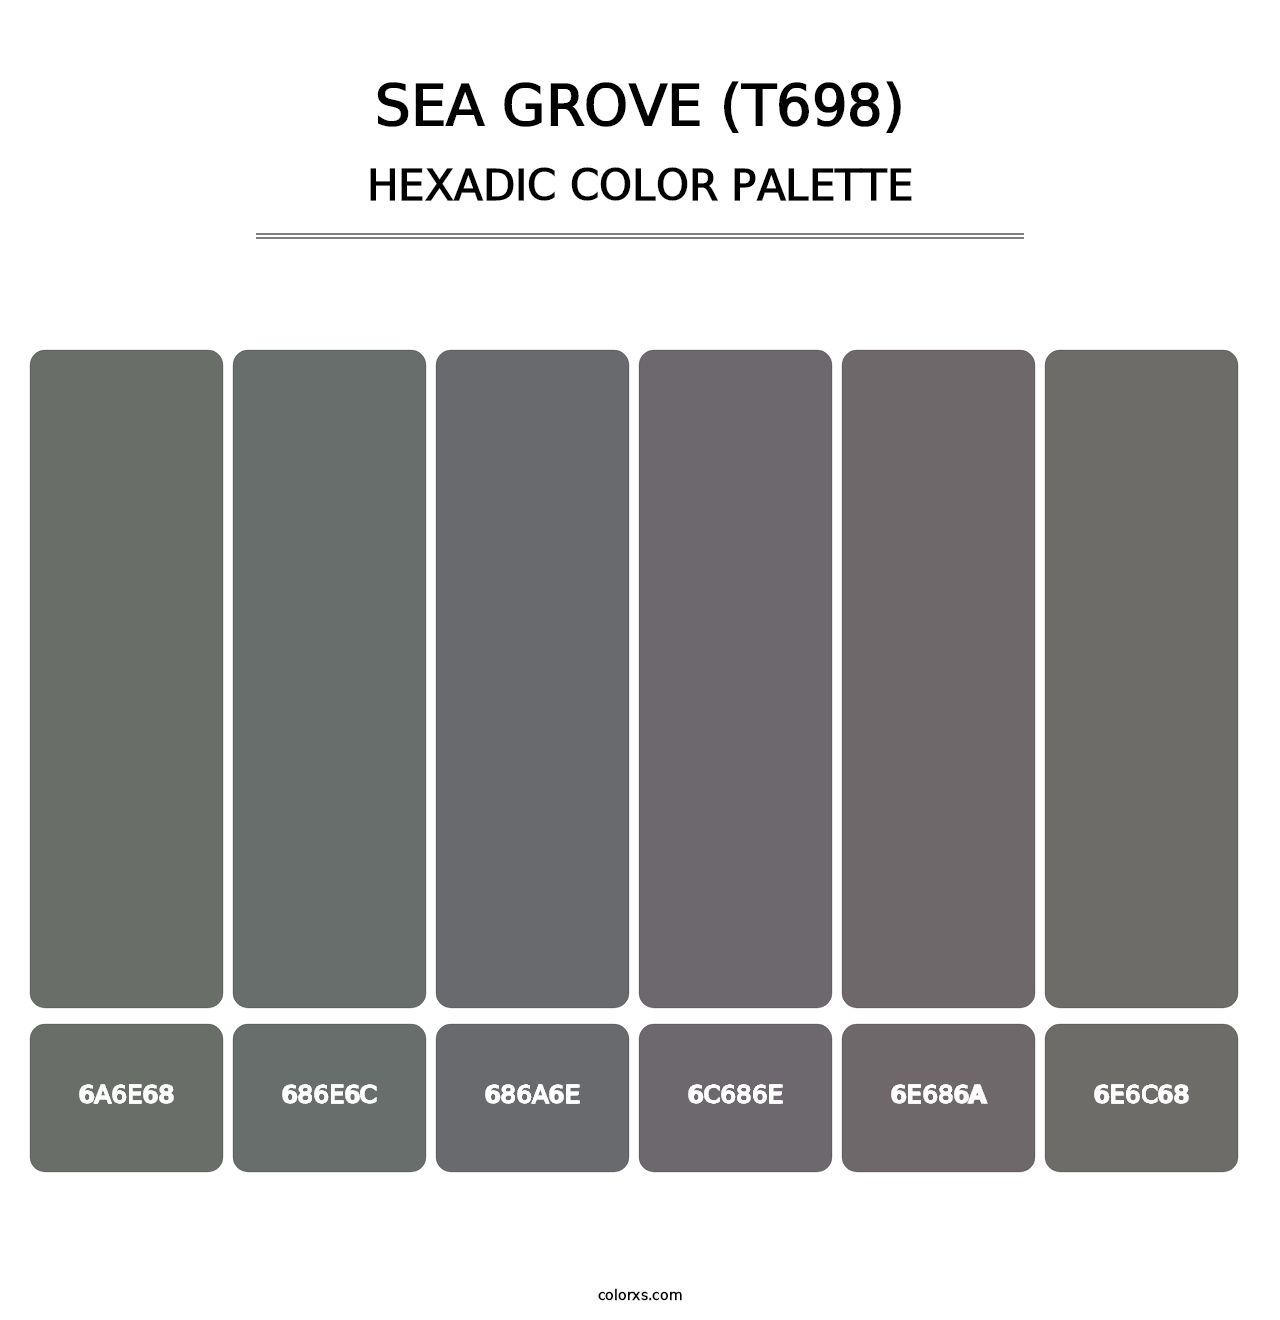 Sea Grove (T698) - Hexadic Color Palette